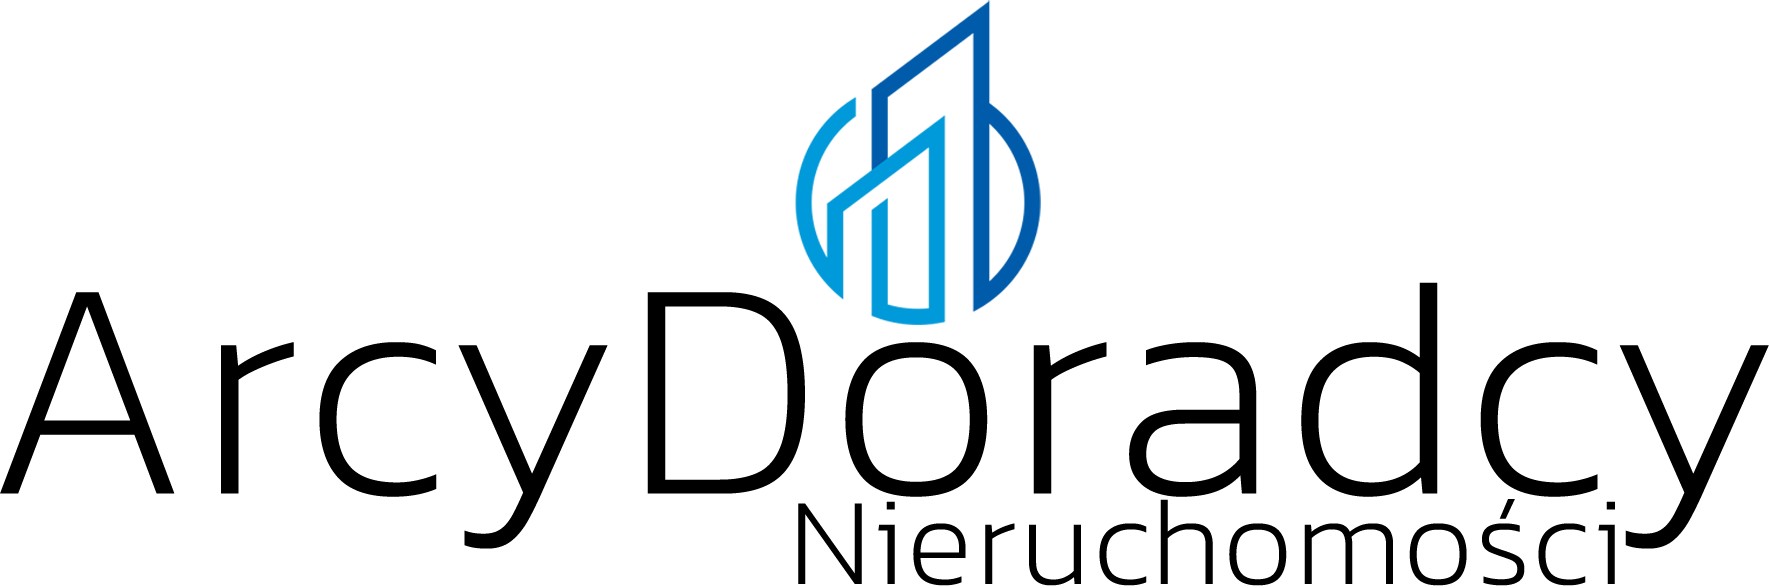 ArcyDoradcy logo